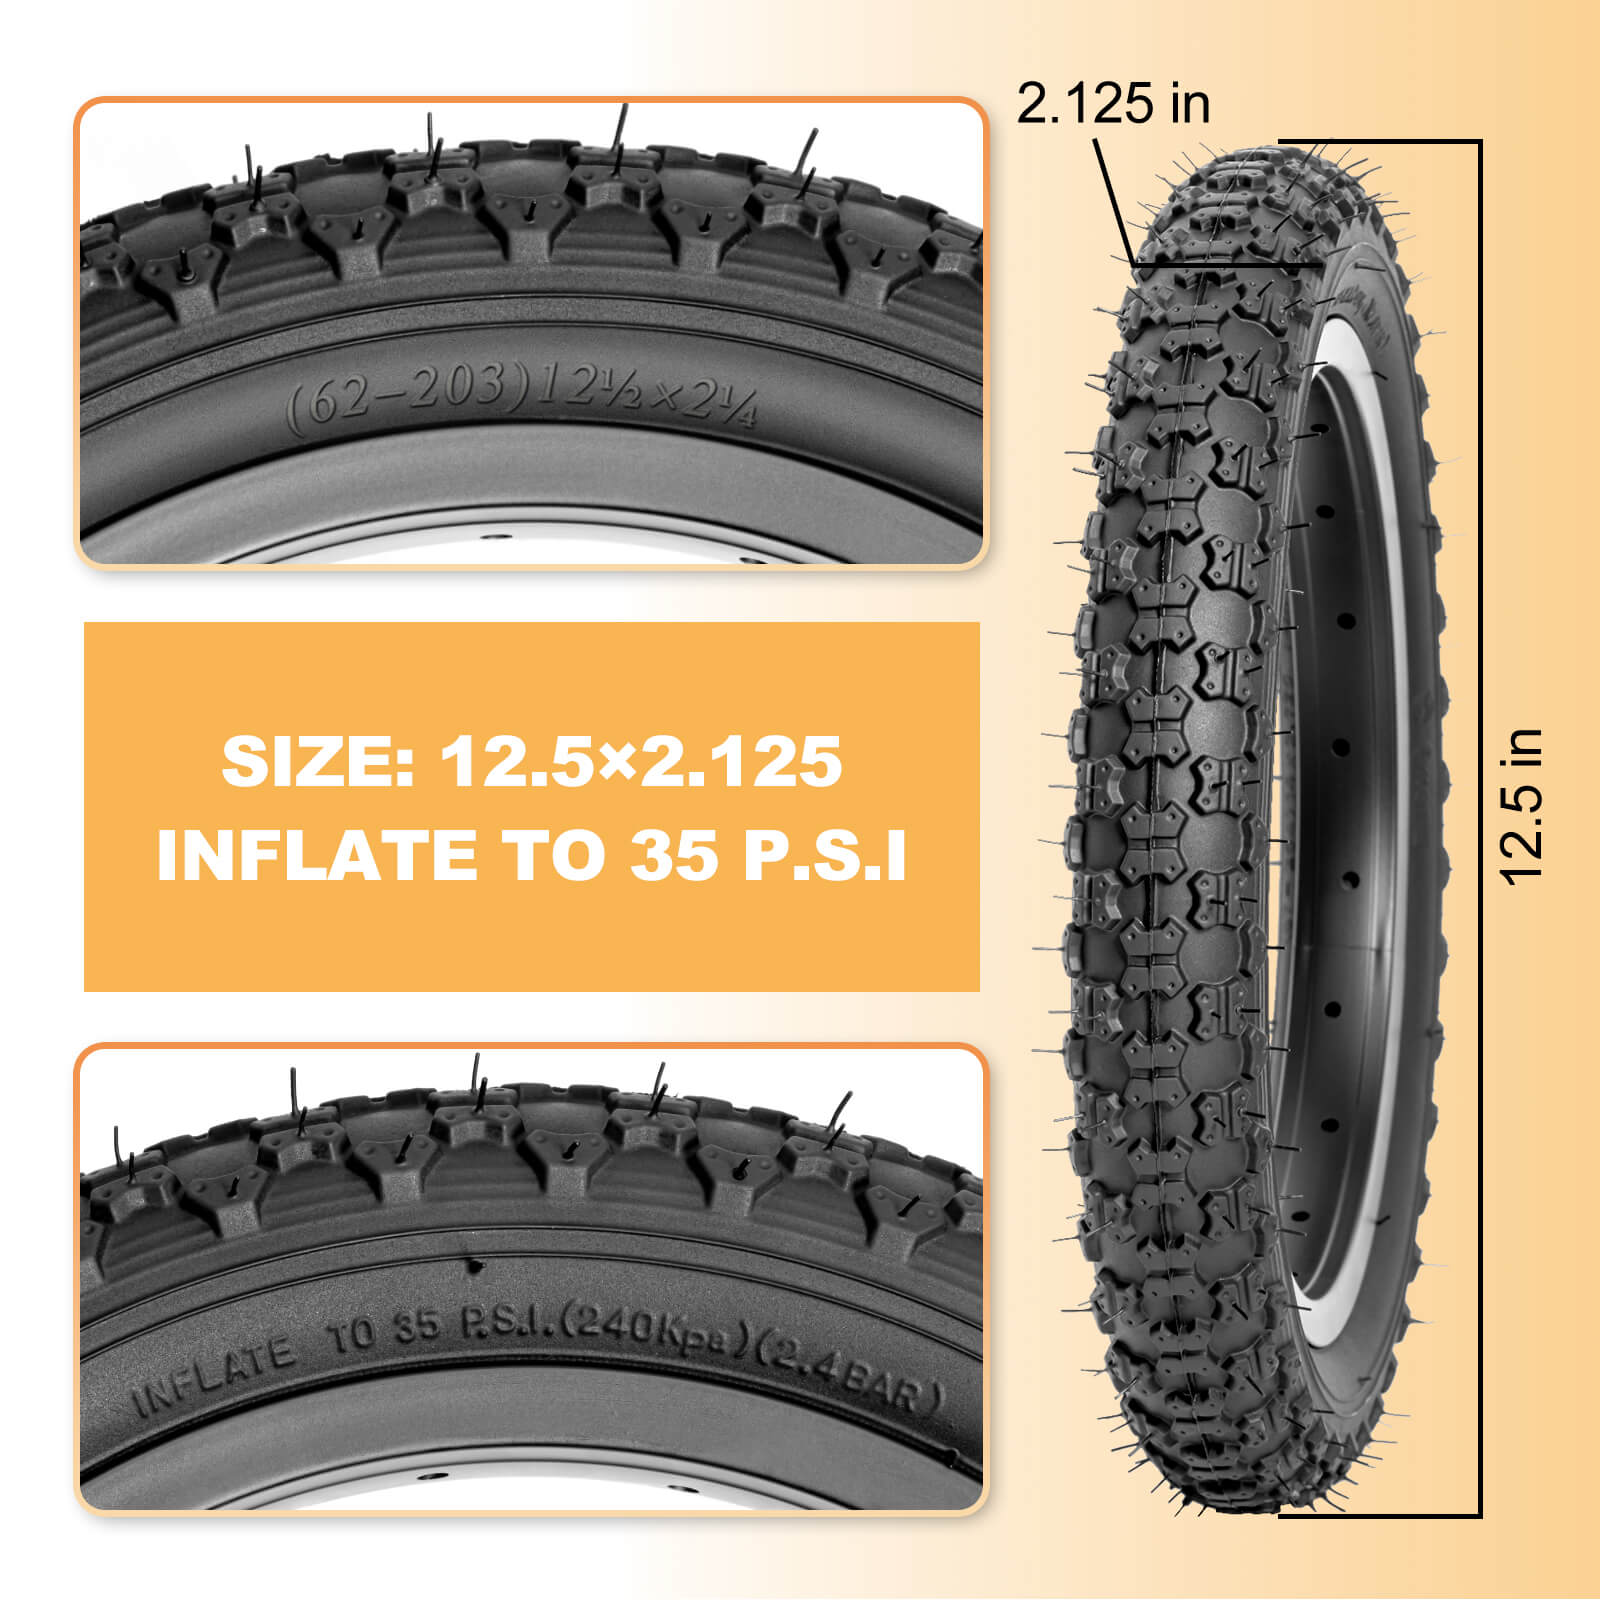 Hycline Bowlite 12.5"×2.125"Childs Bike Tire